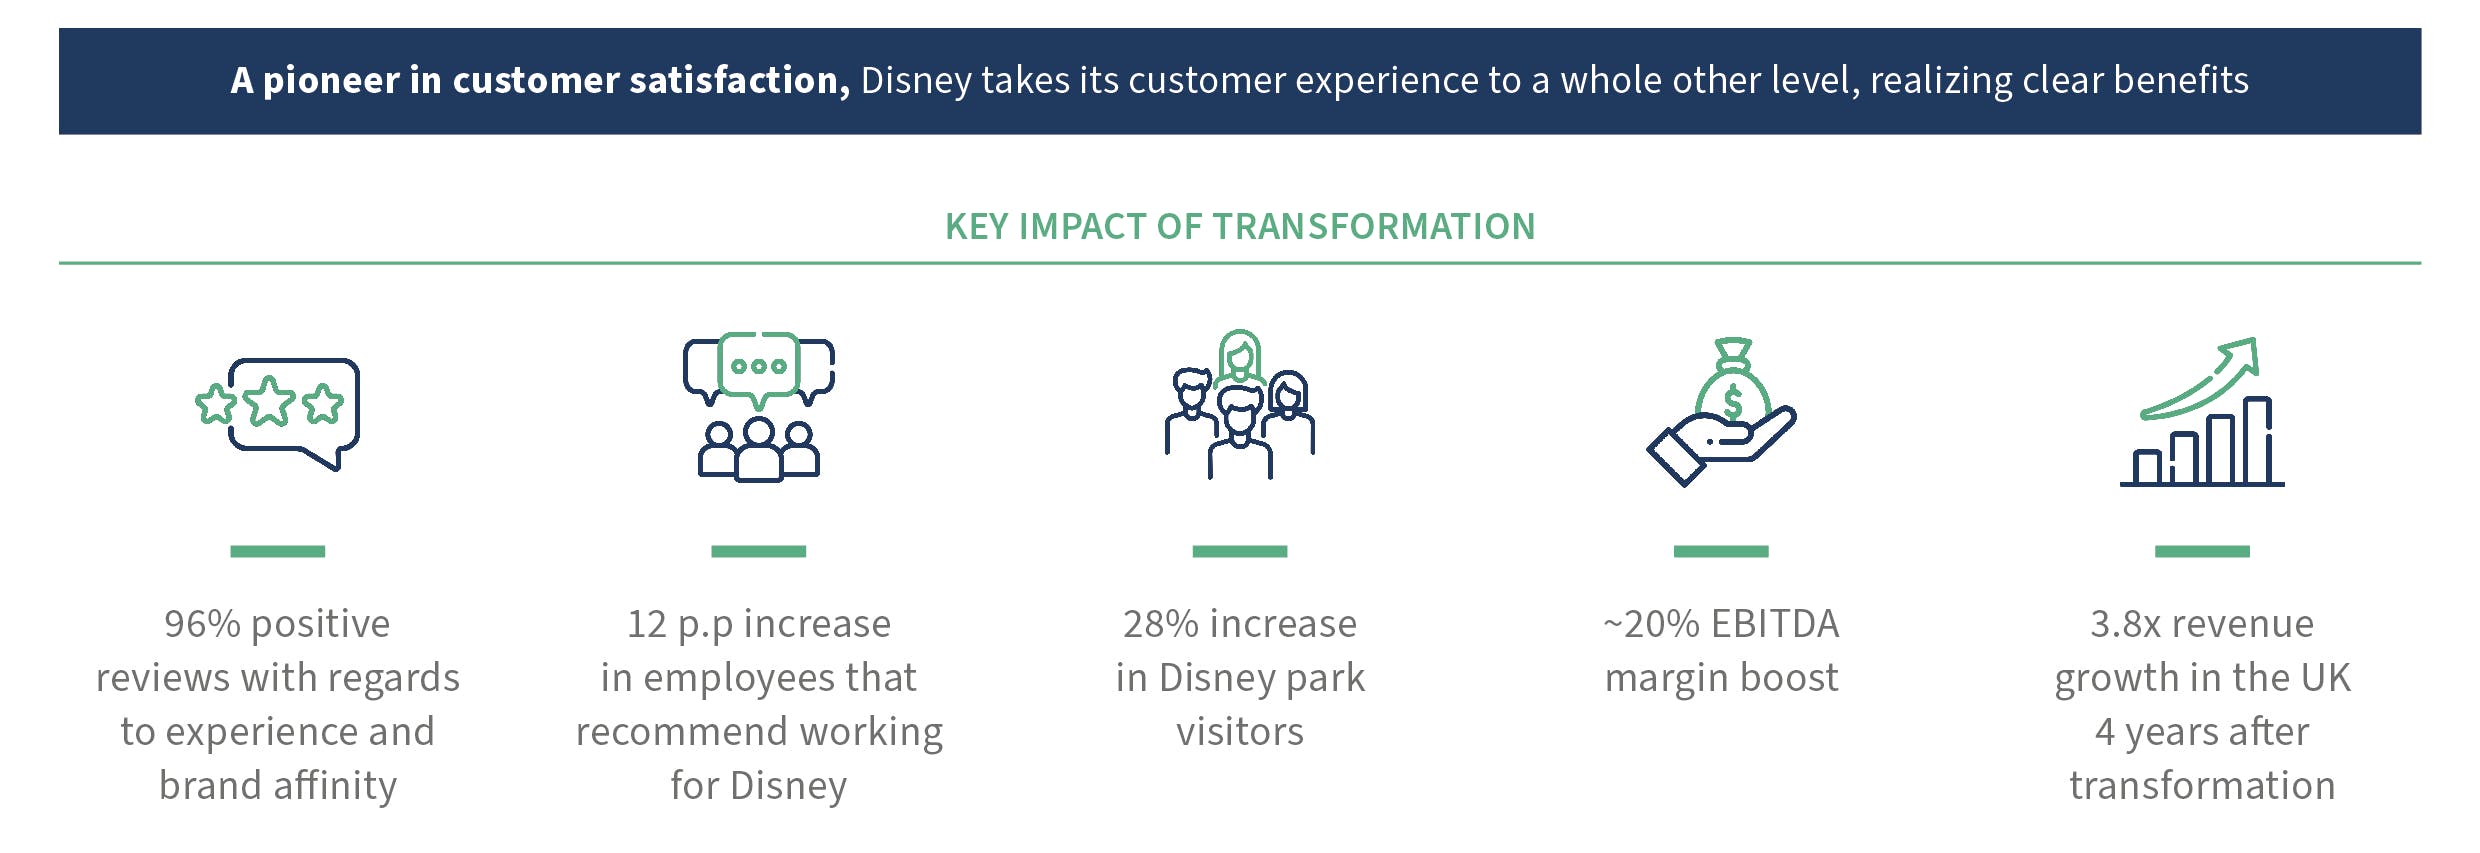 Disney’s total experience focuses benefits